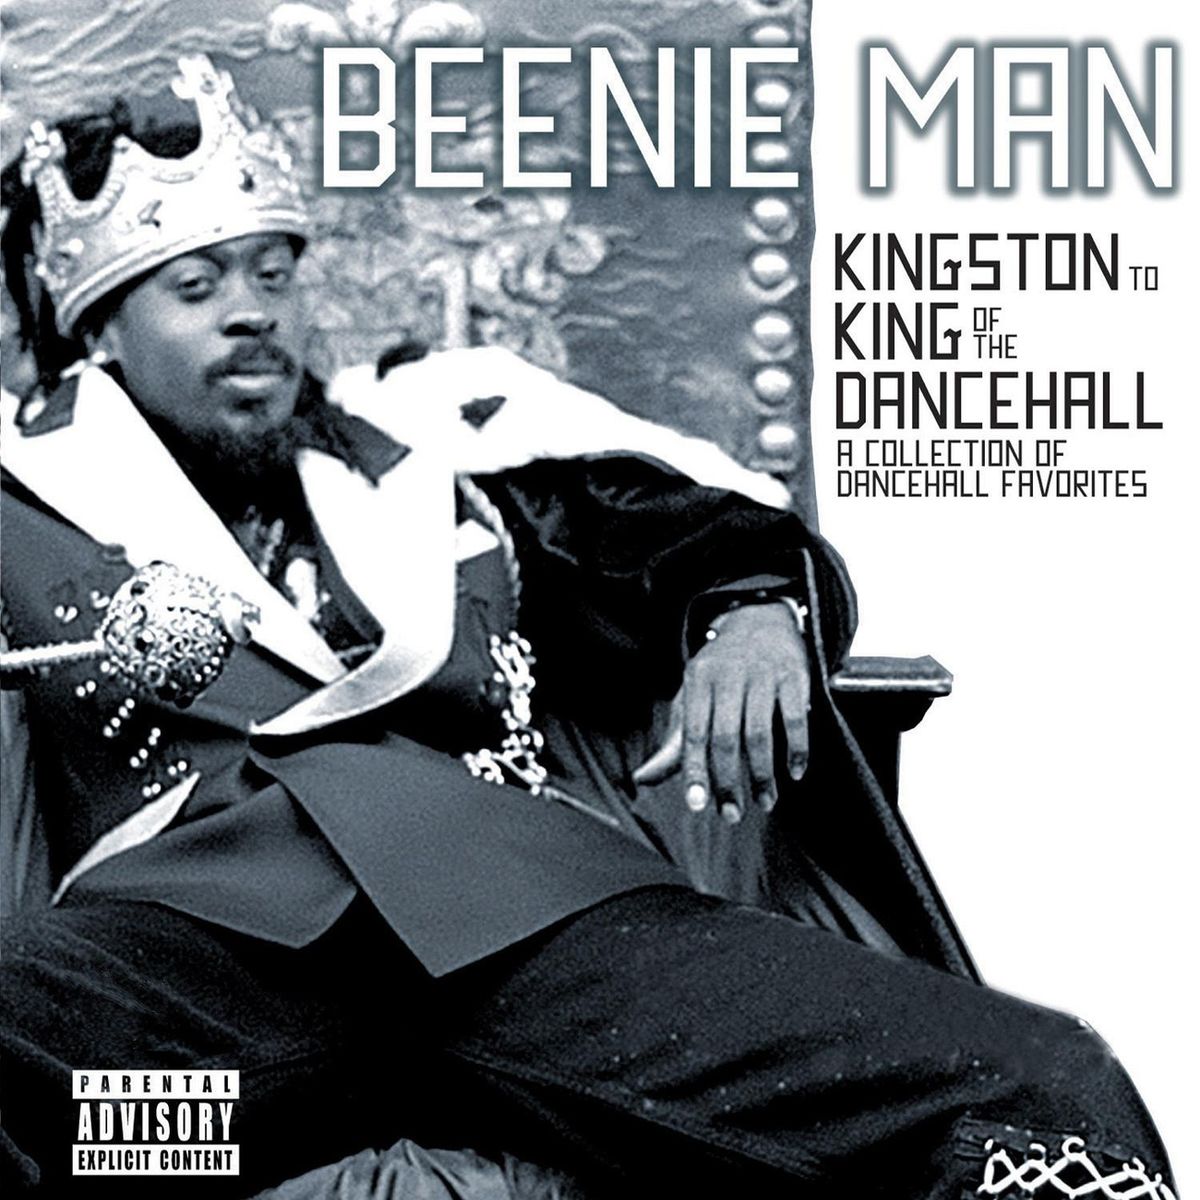 1 - Beenie Man - Who Am I.mp3